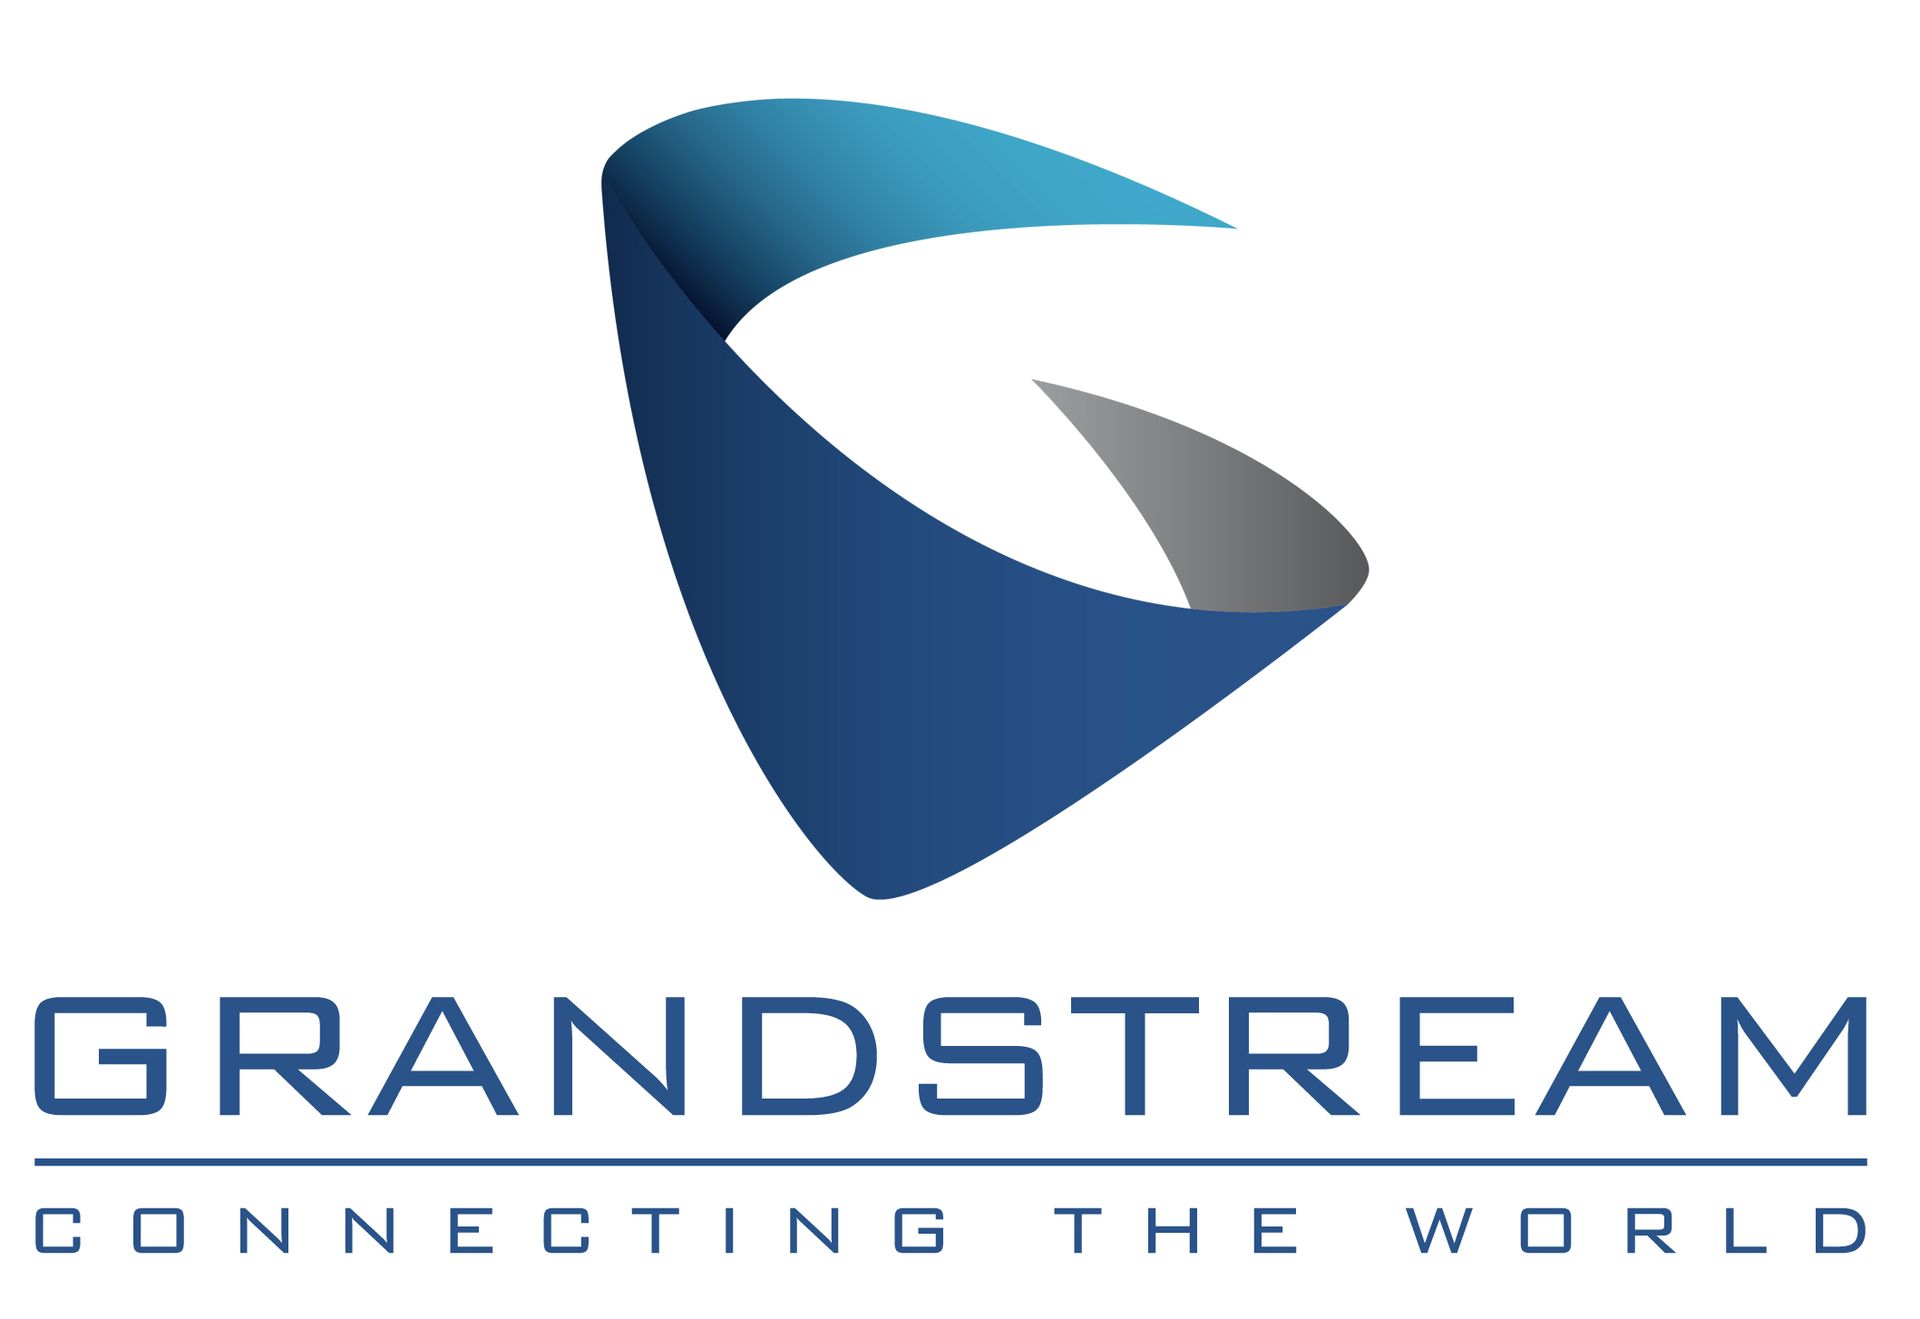 Brand: Grandstream